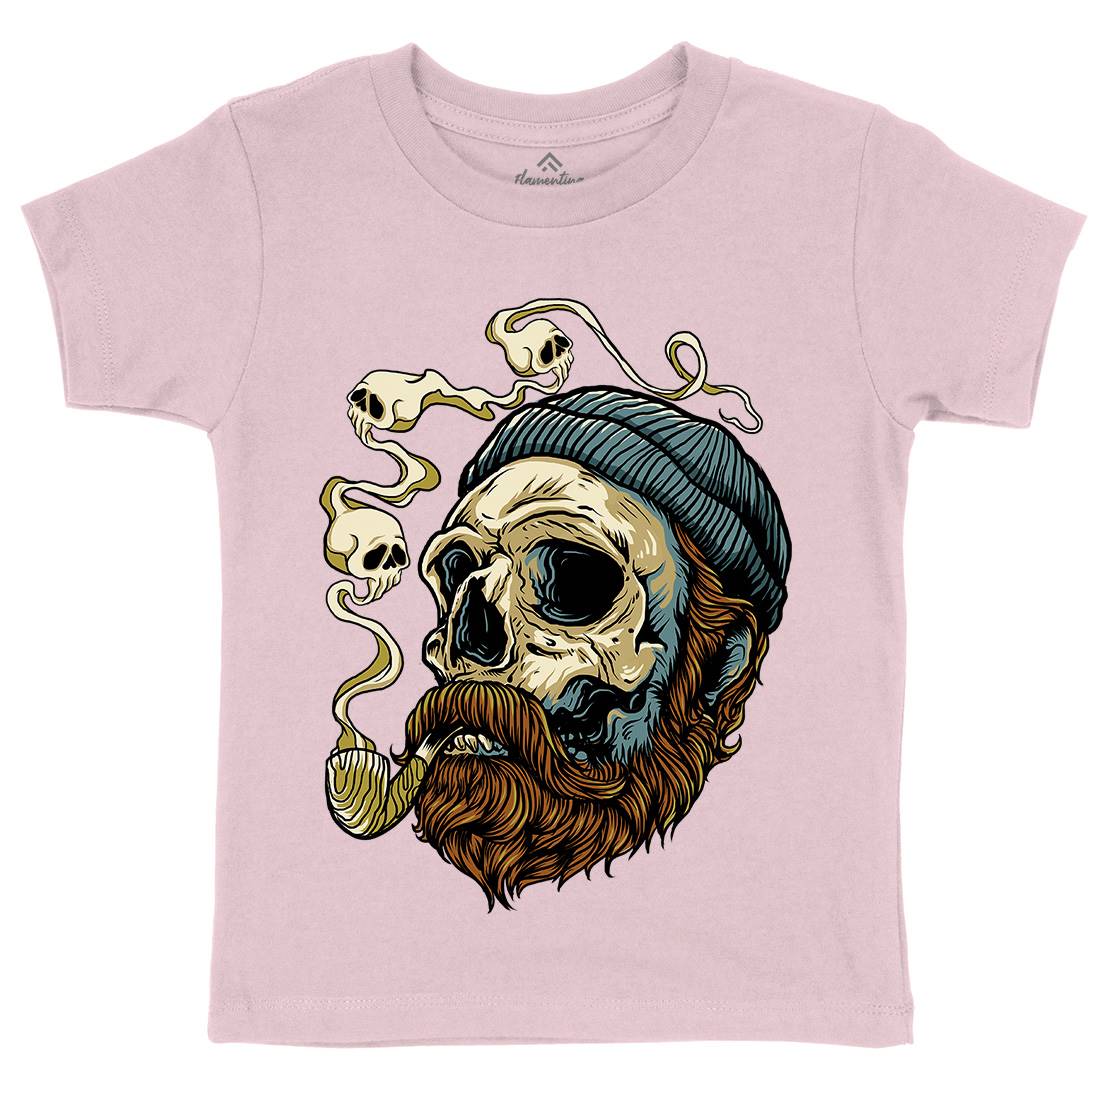 Sailor Skull Kids Crew Neck T-Shirt Navy D074